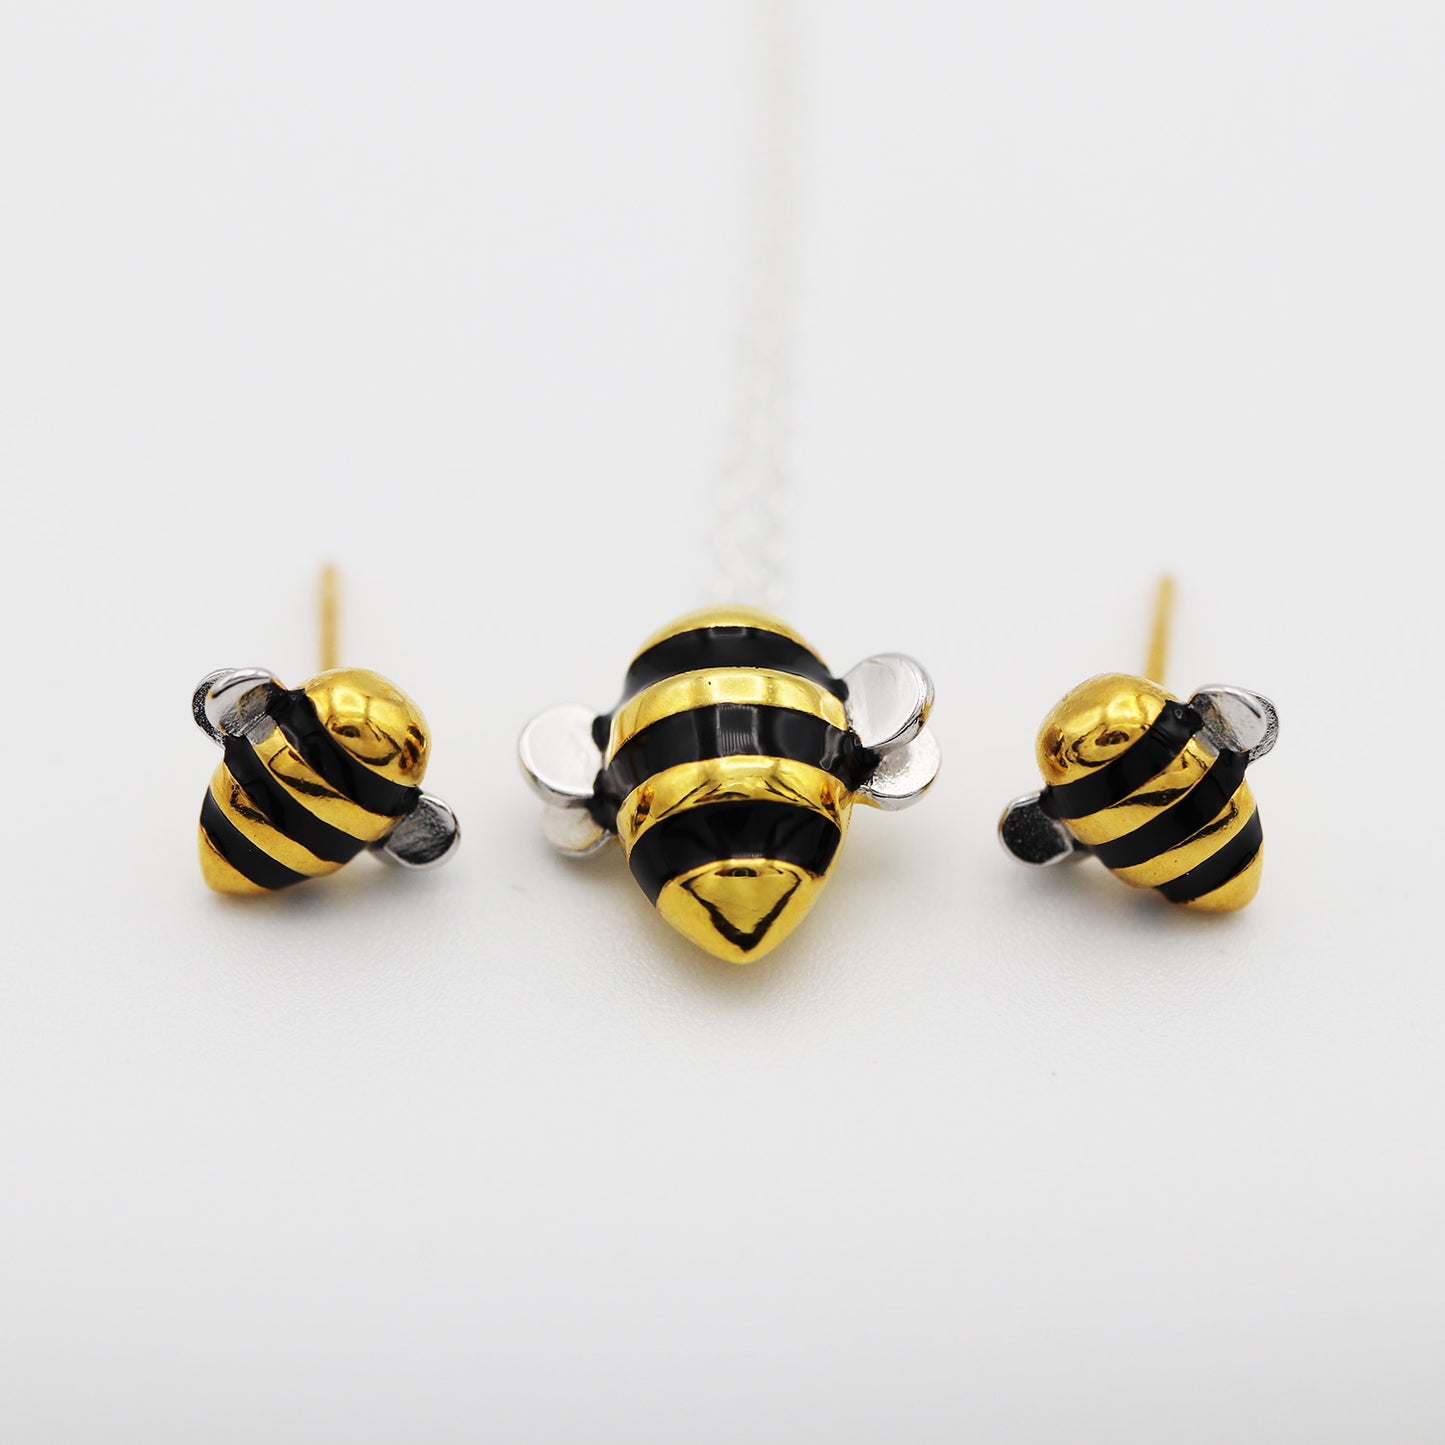 Bee-Inspired Bumblebee Necklace + Earring Set